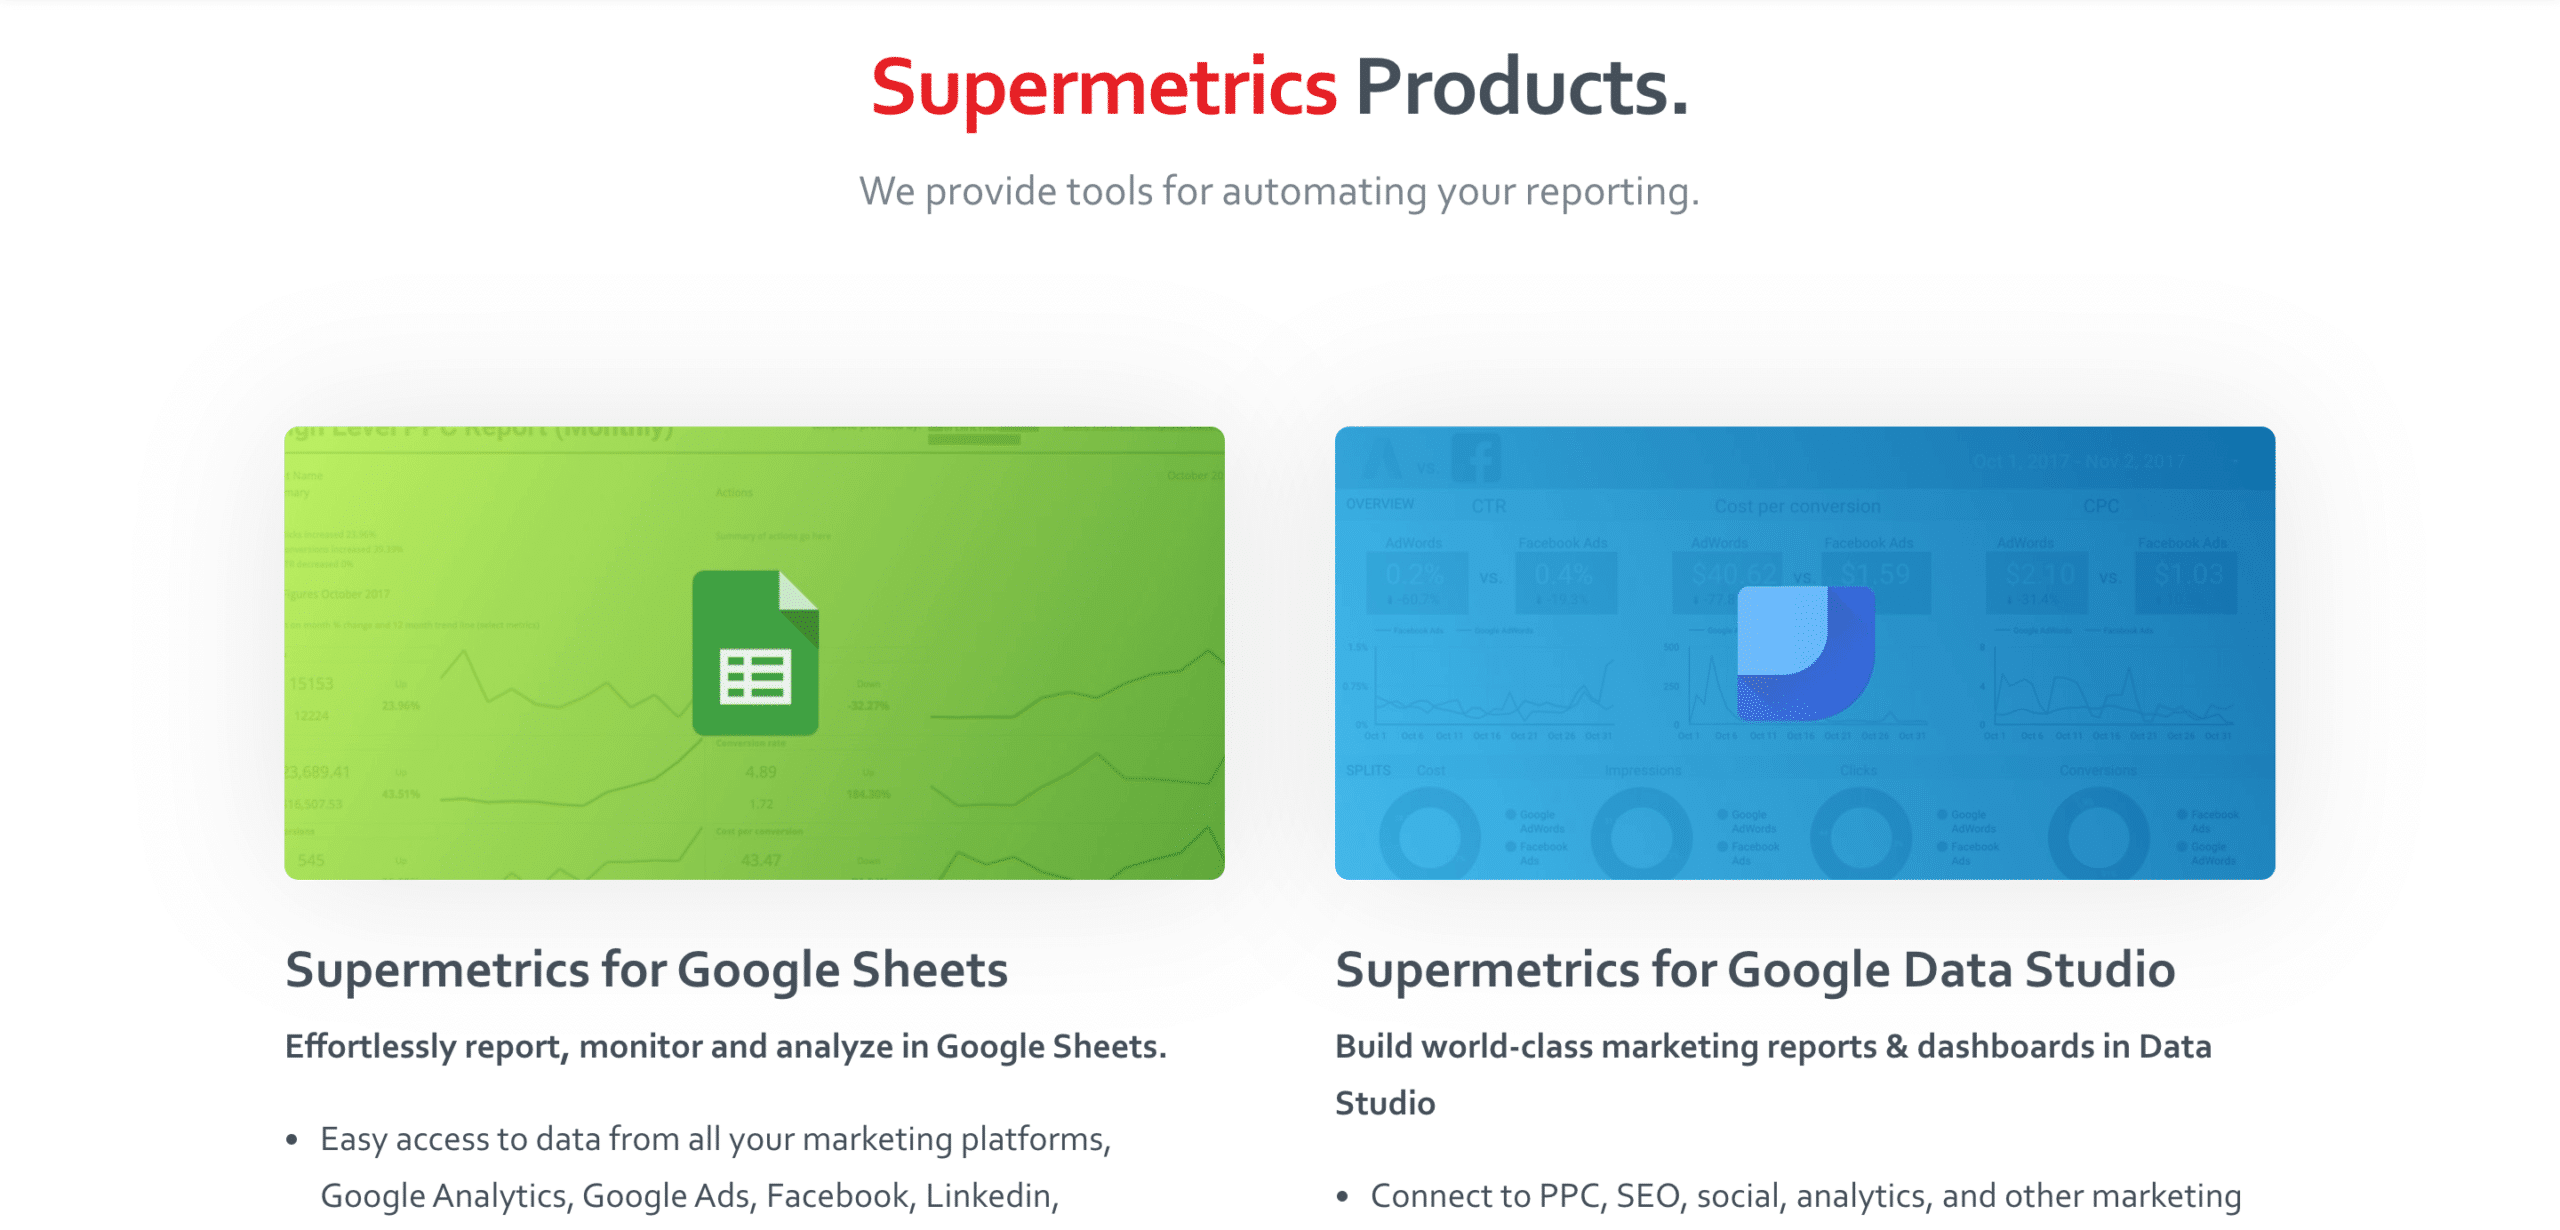 Supermetrics products